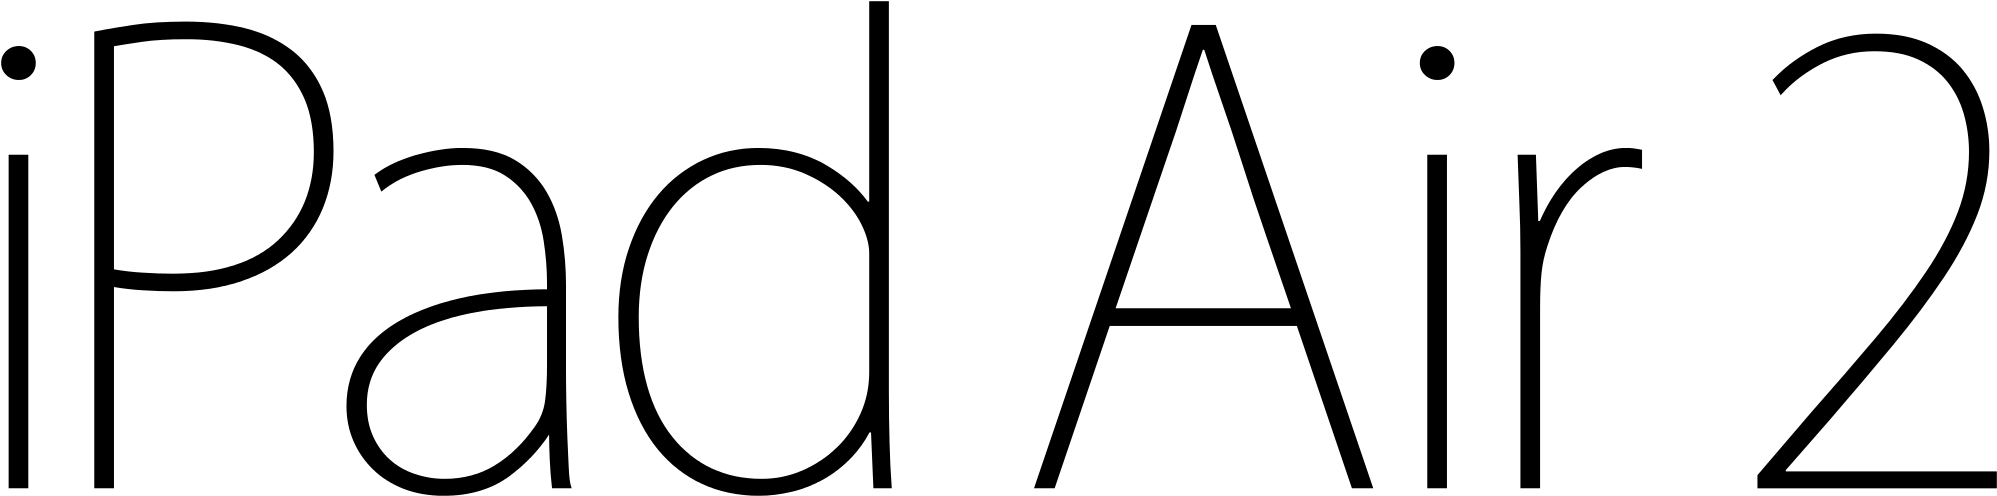 56, December 1, 2014 - Ipad Air 2 Logo (2000x507)